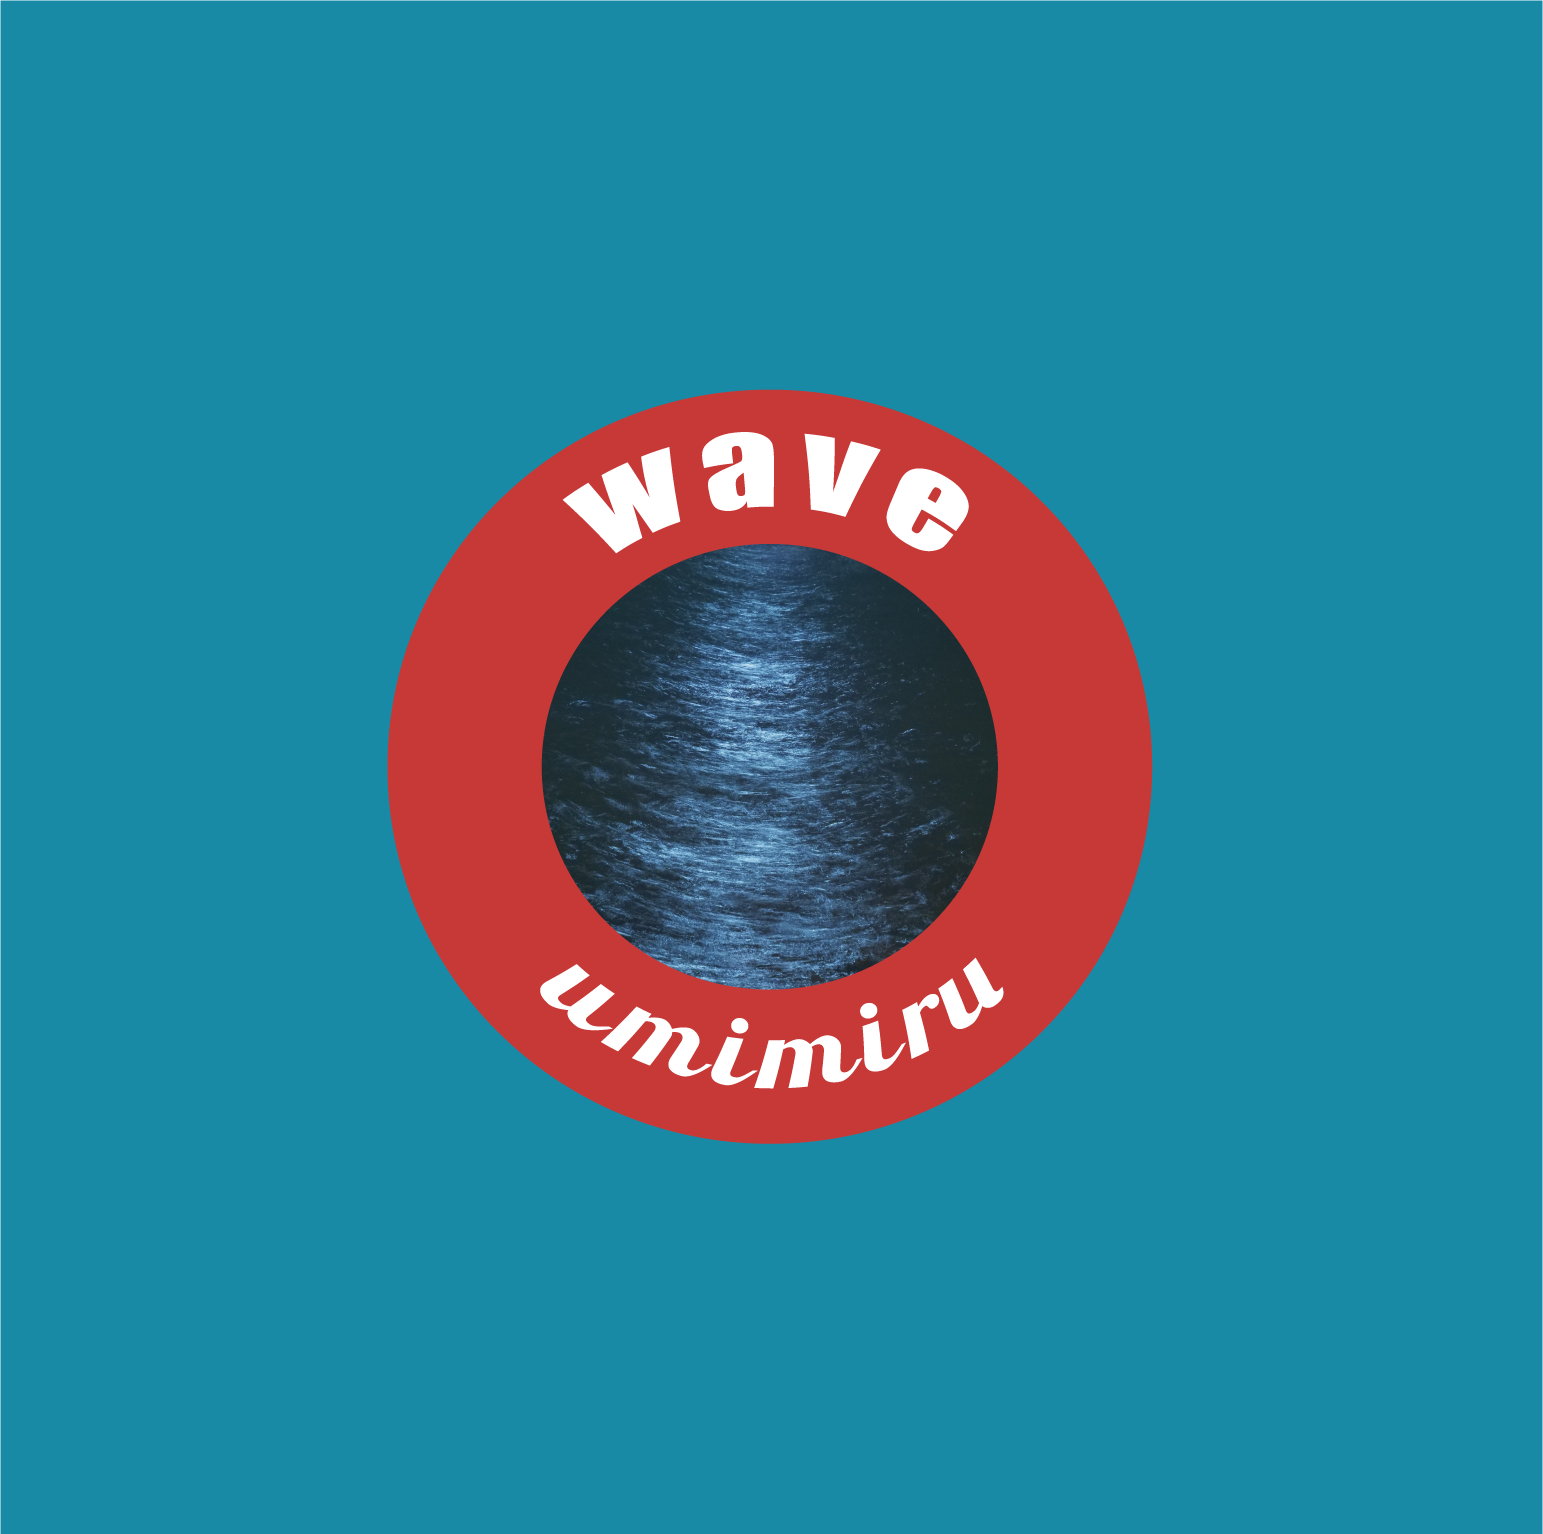 WAVE